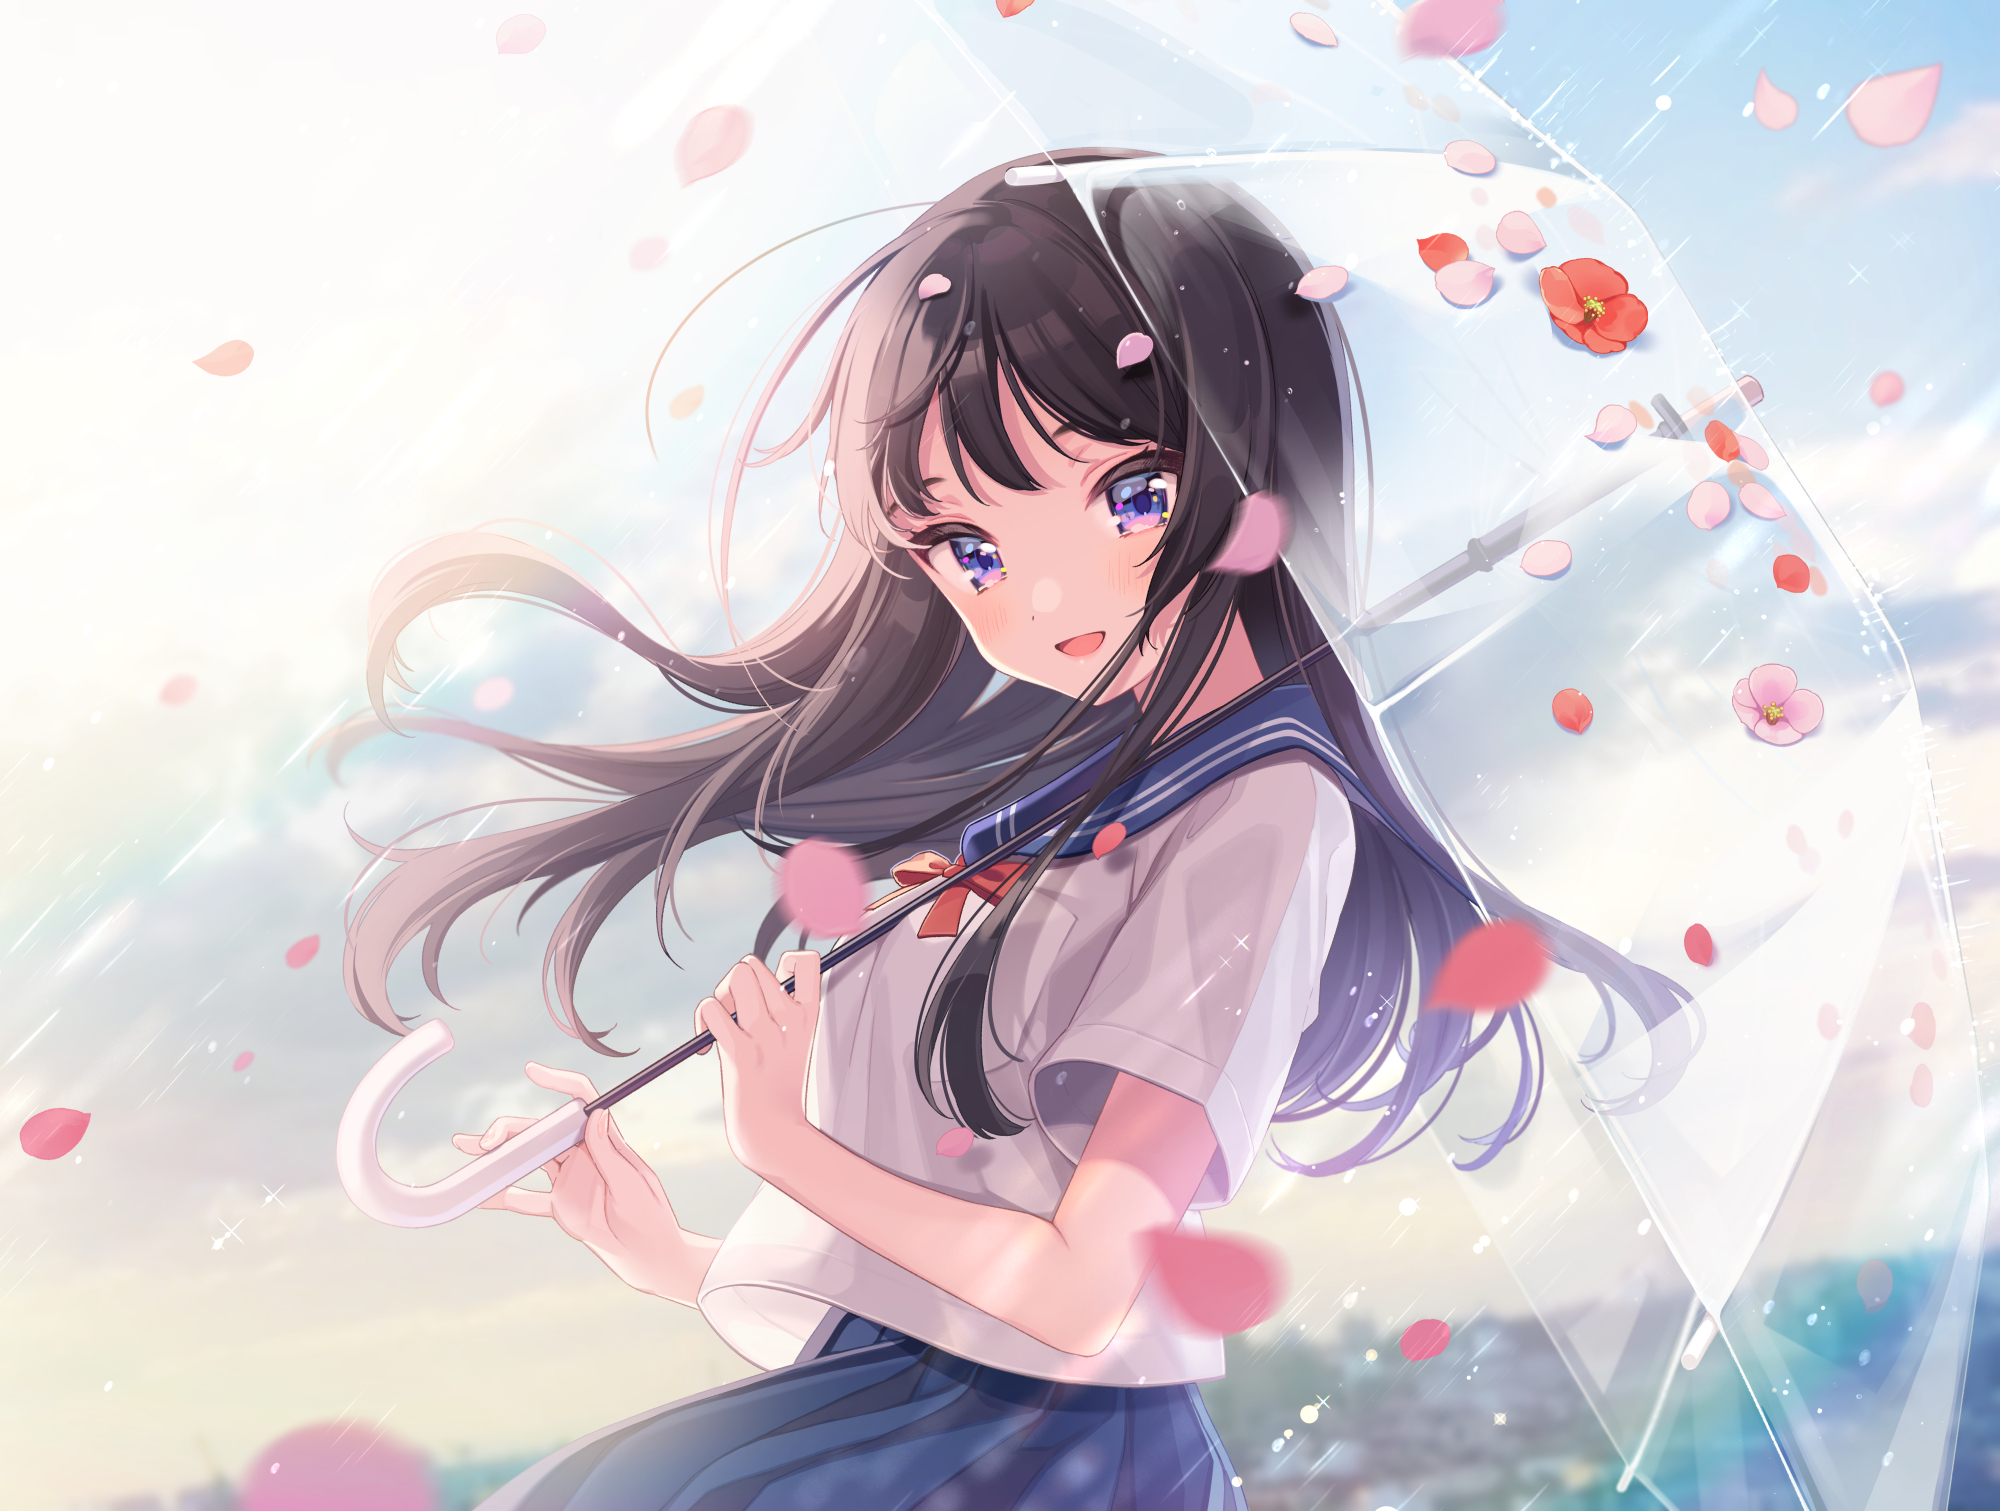 Anime umbrella girl dark Wallpapers Download